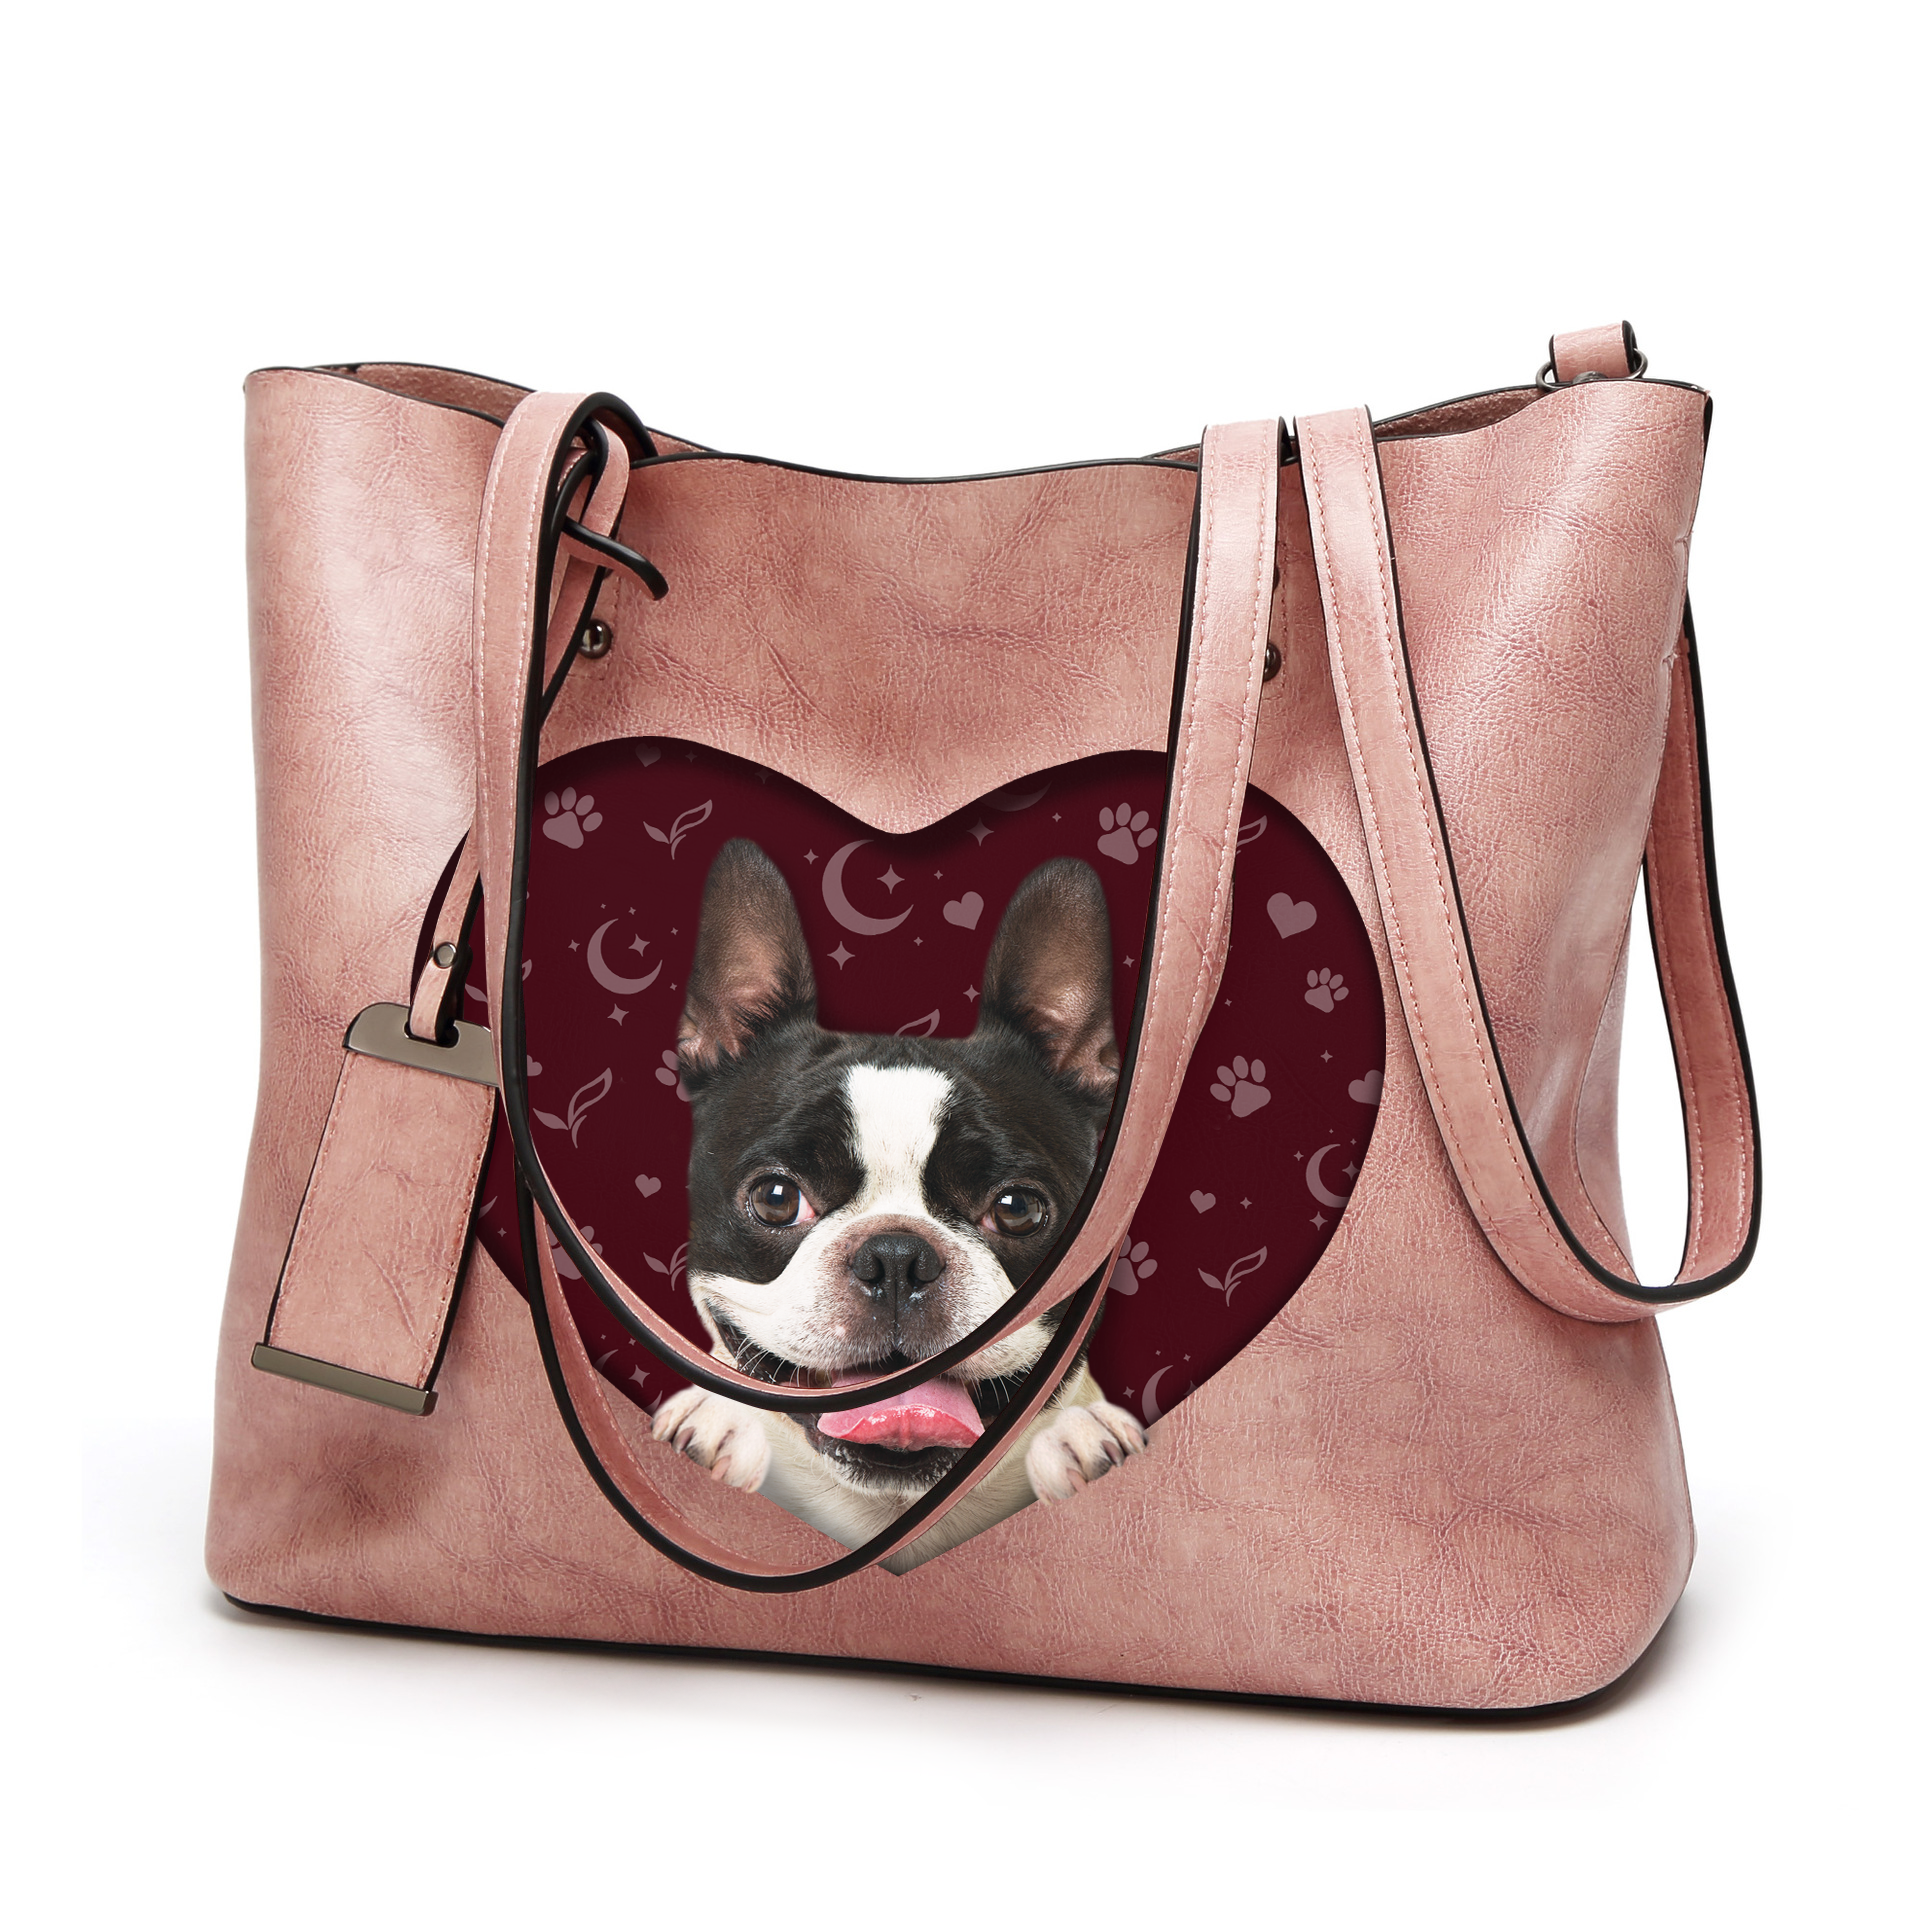 I Know I'm Cute - Boston Terrier Glamour Handbag V1 - 7